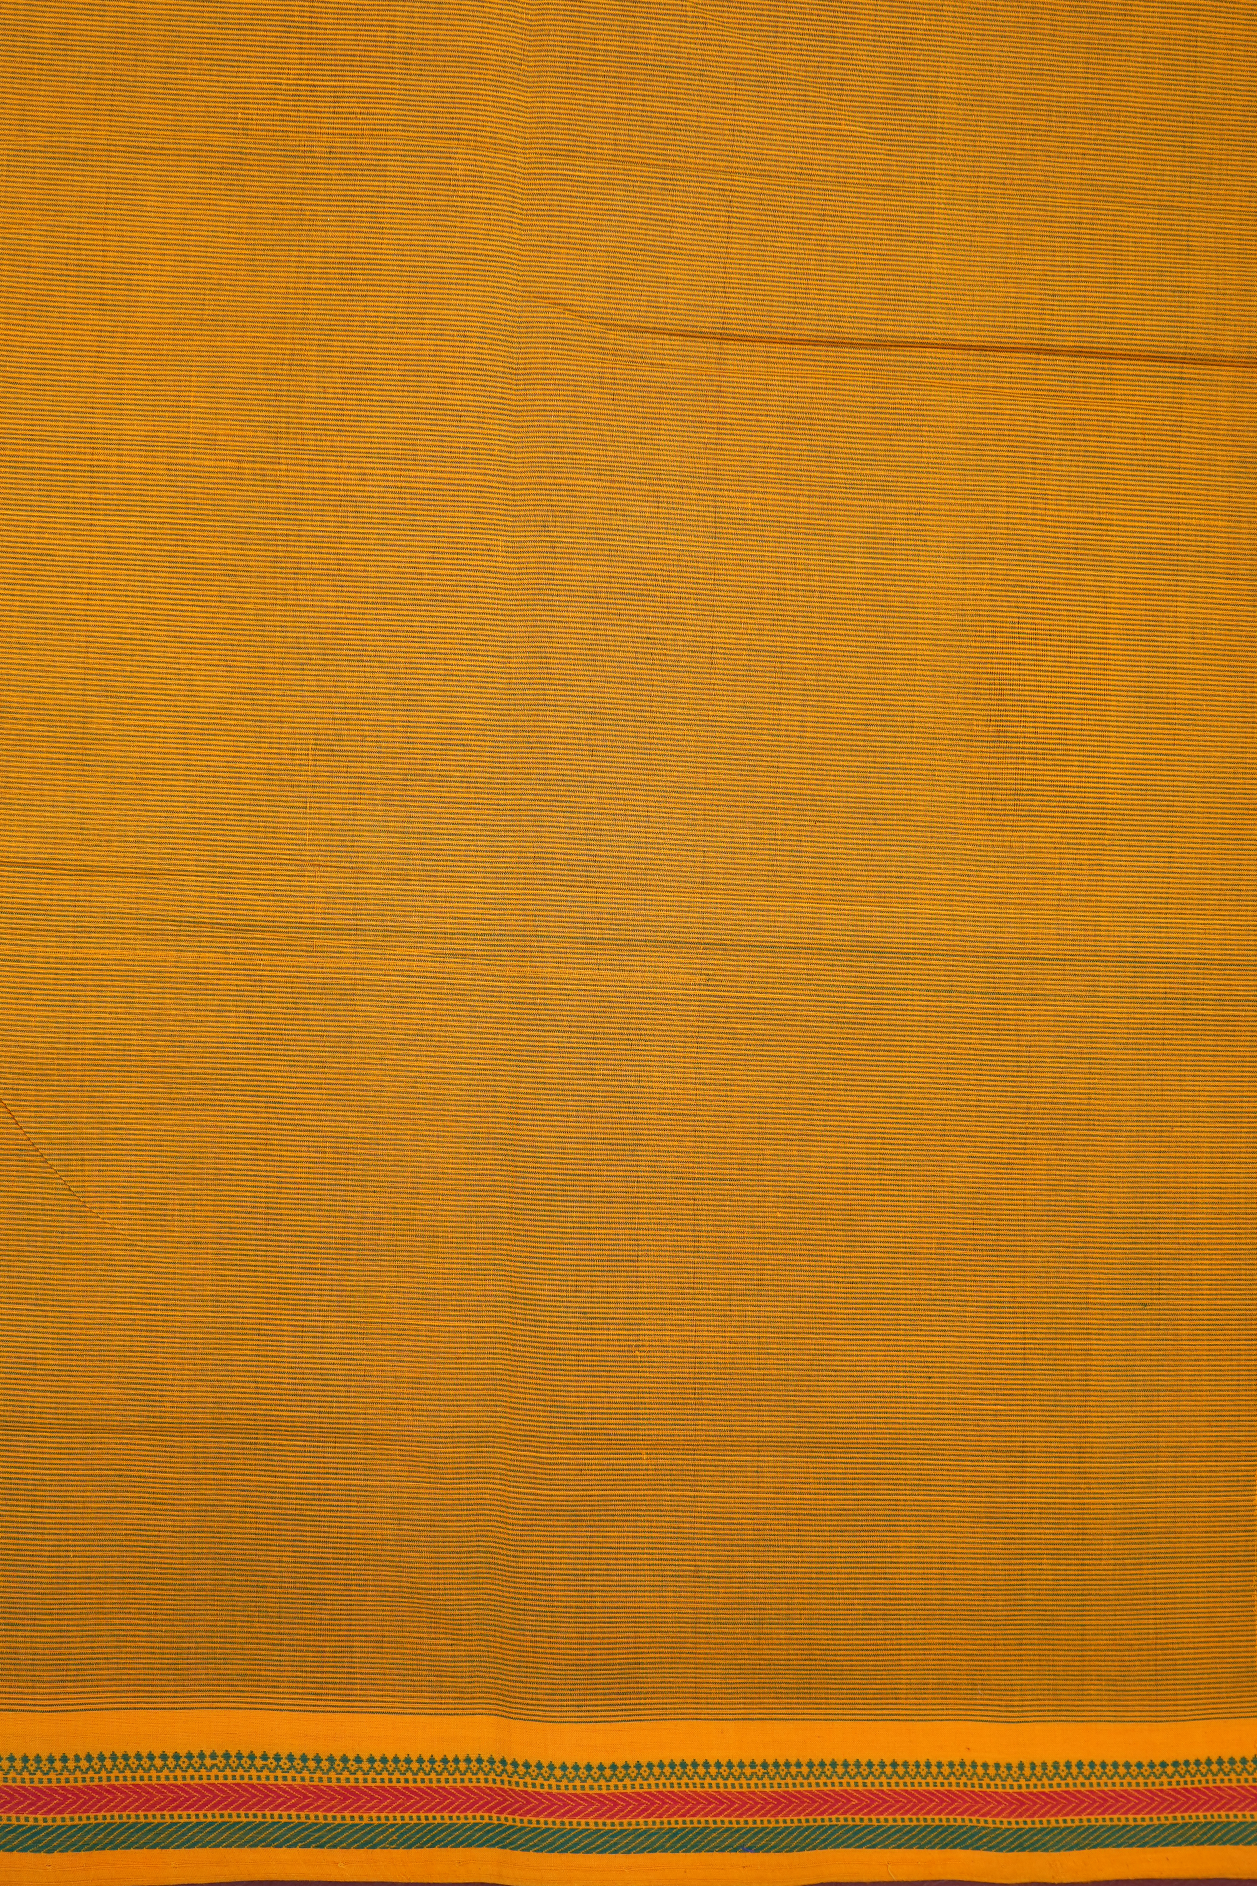 Threadwork Border Golden Yellow Mangalagiri Cotton Saree